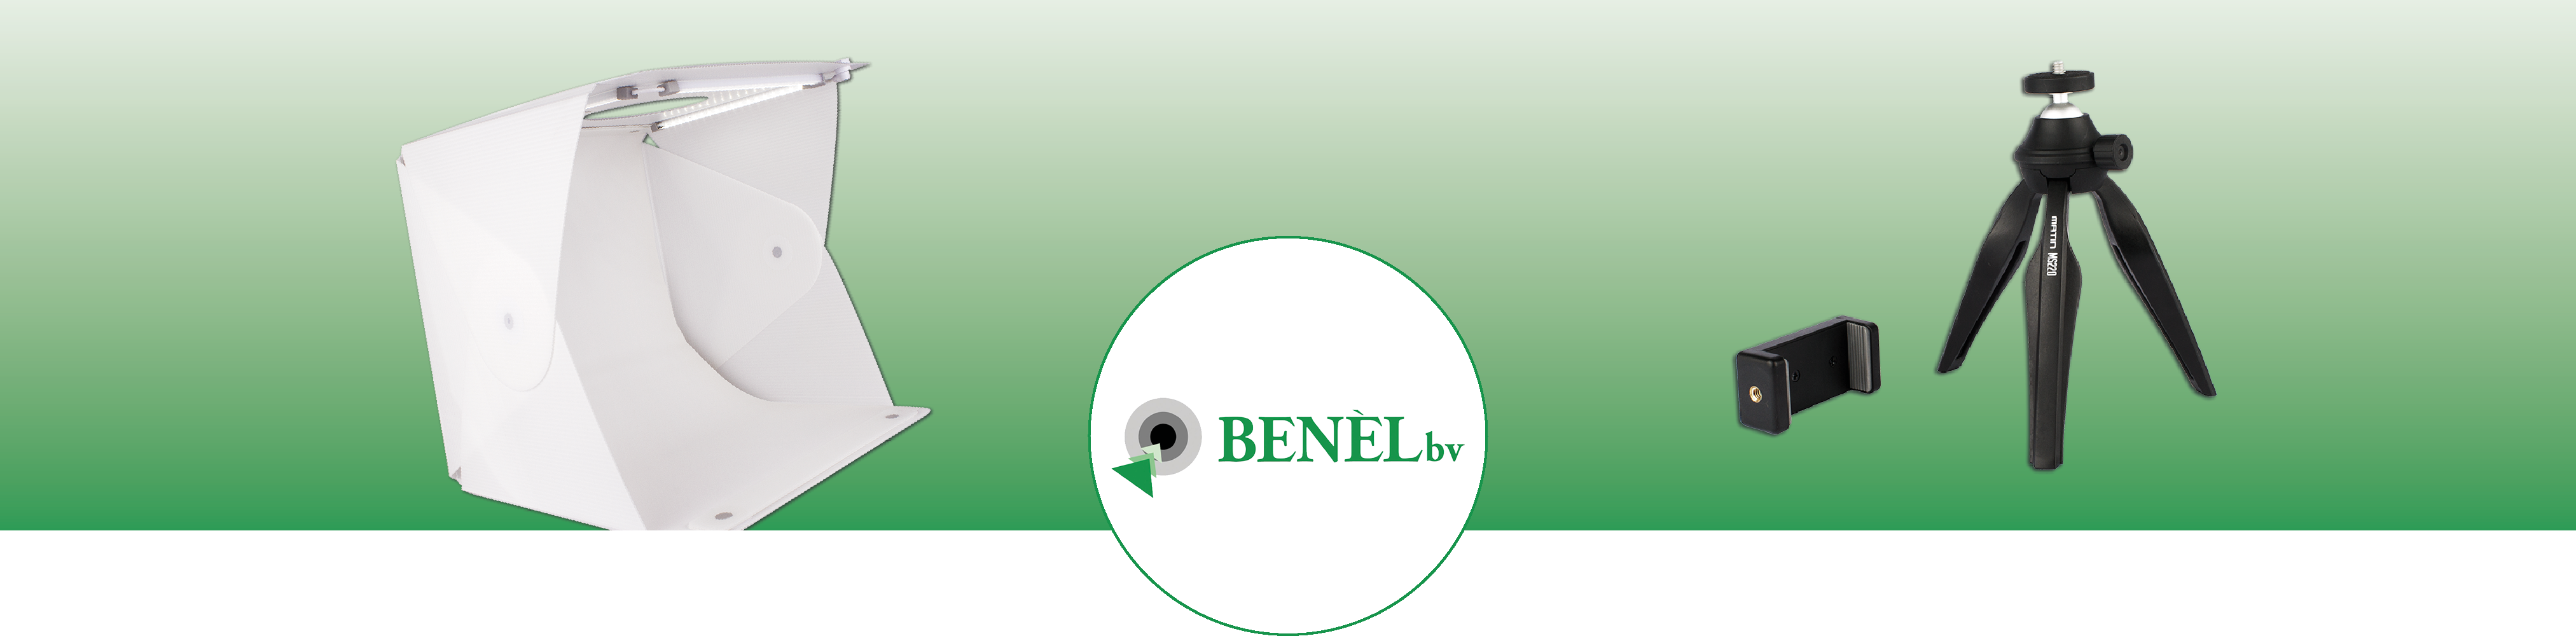 banner_benel